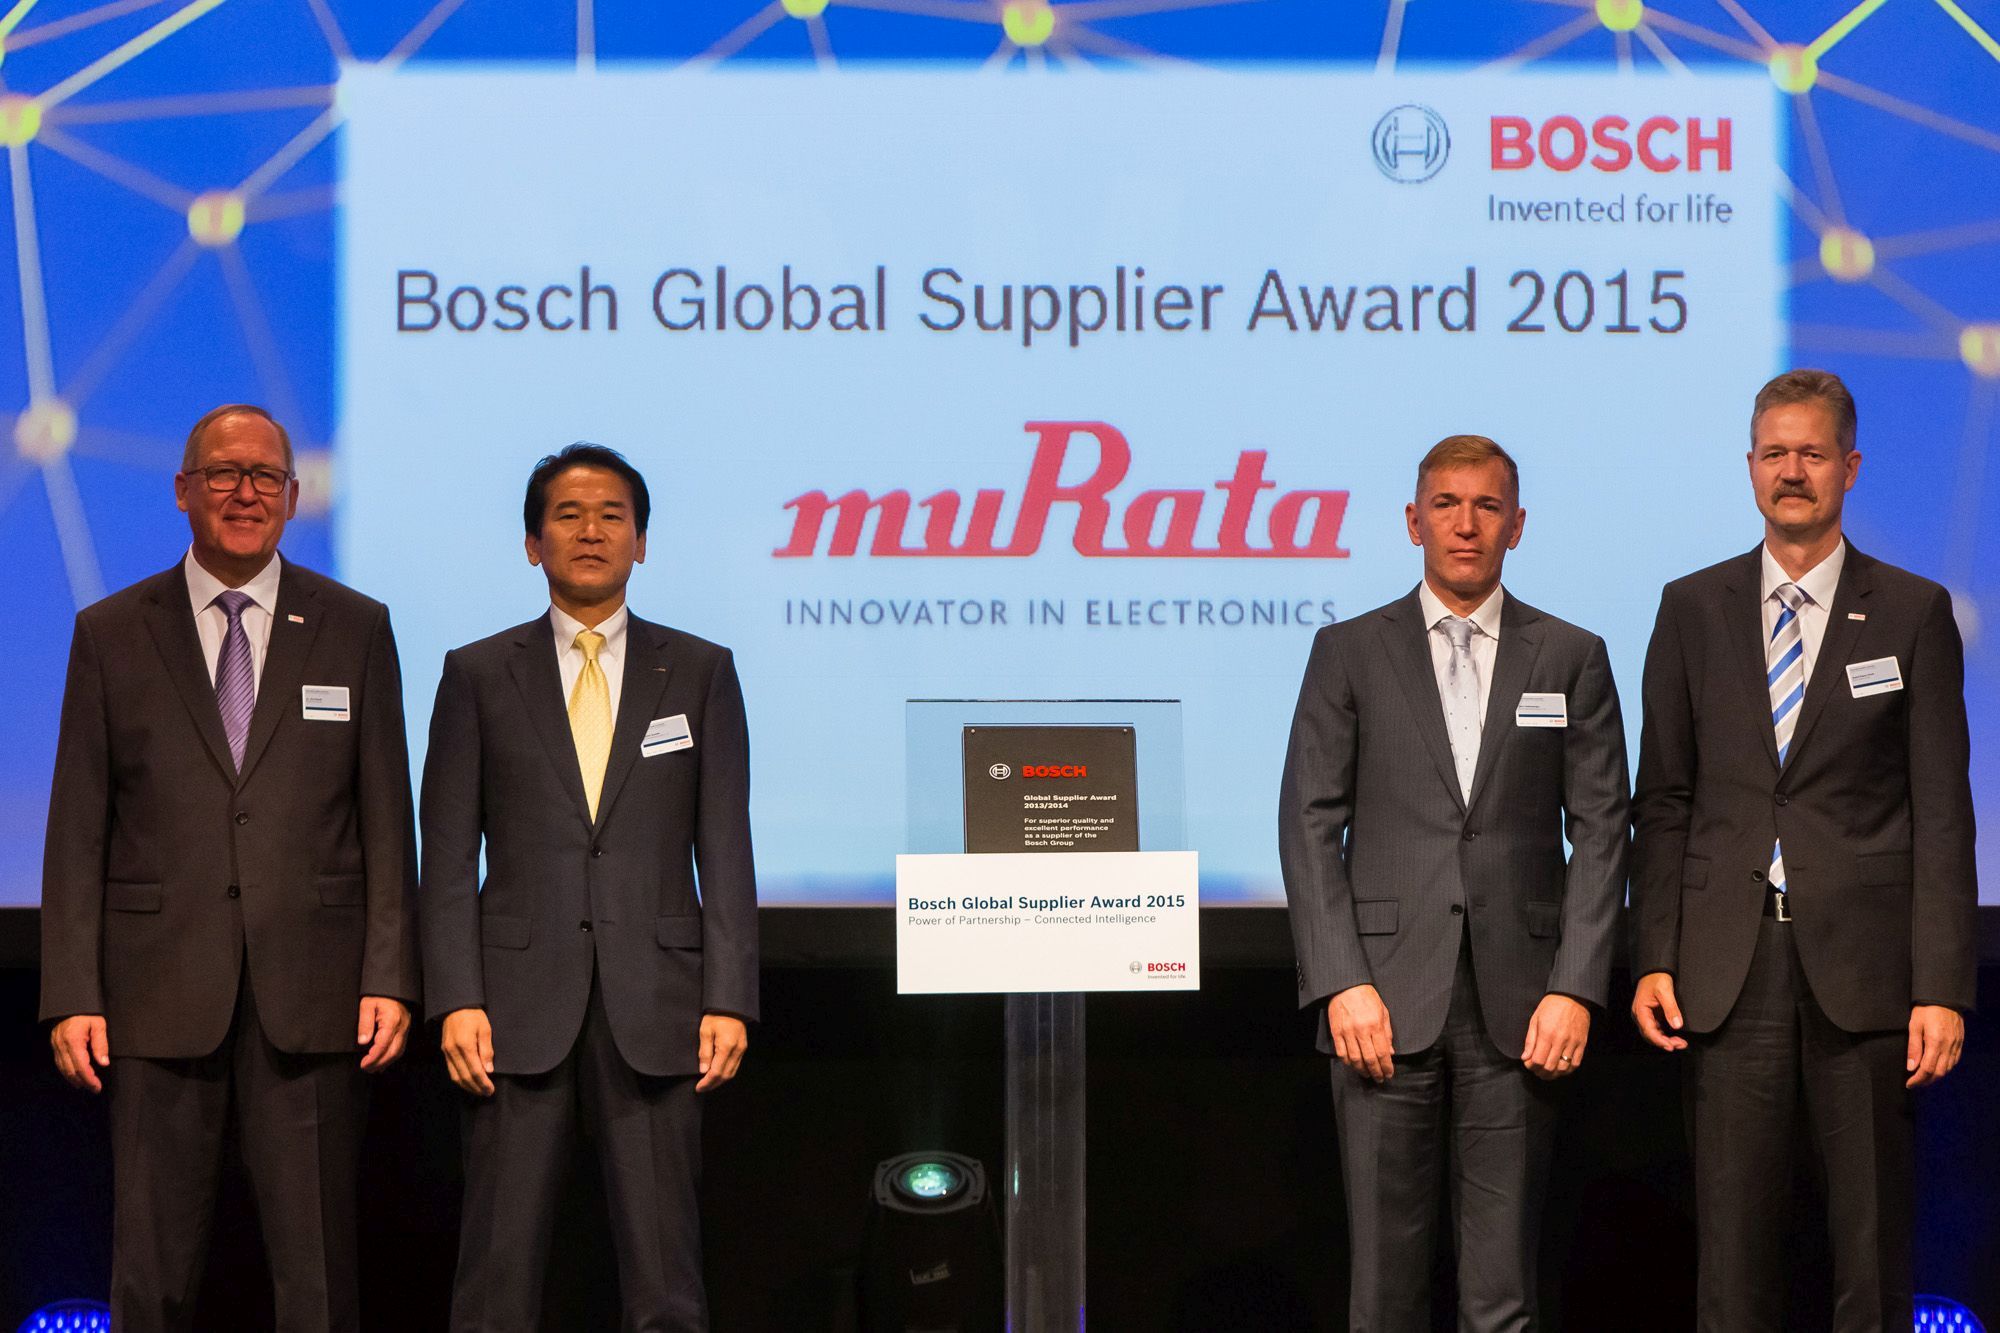 Murata receives Power of Partnership award at Bosch Global Supplier Award 2015 